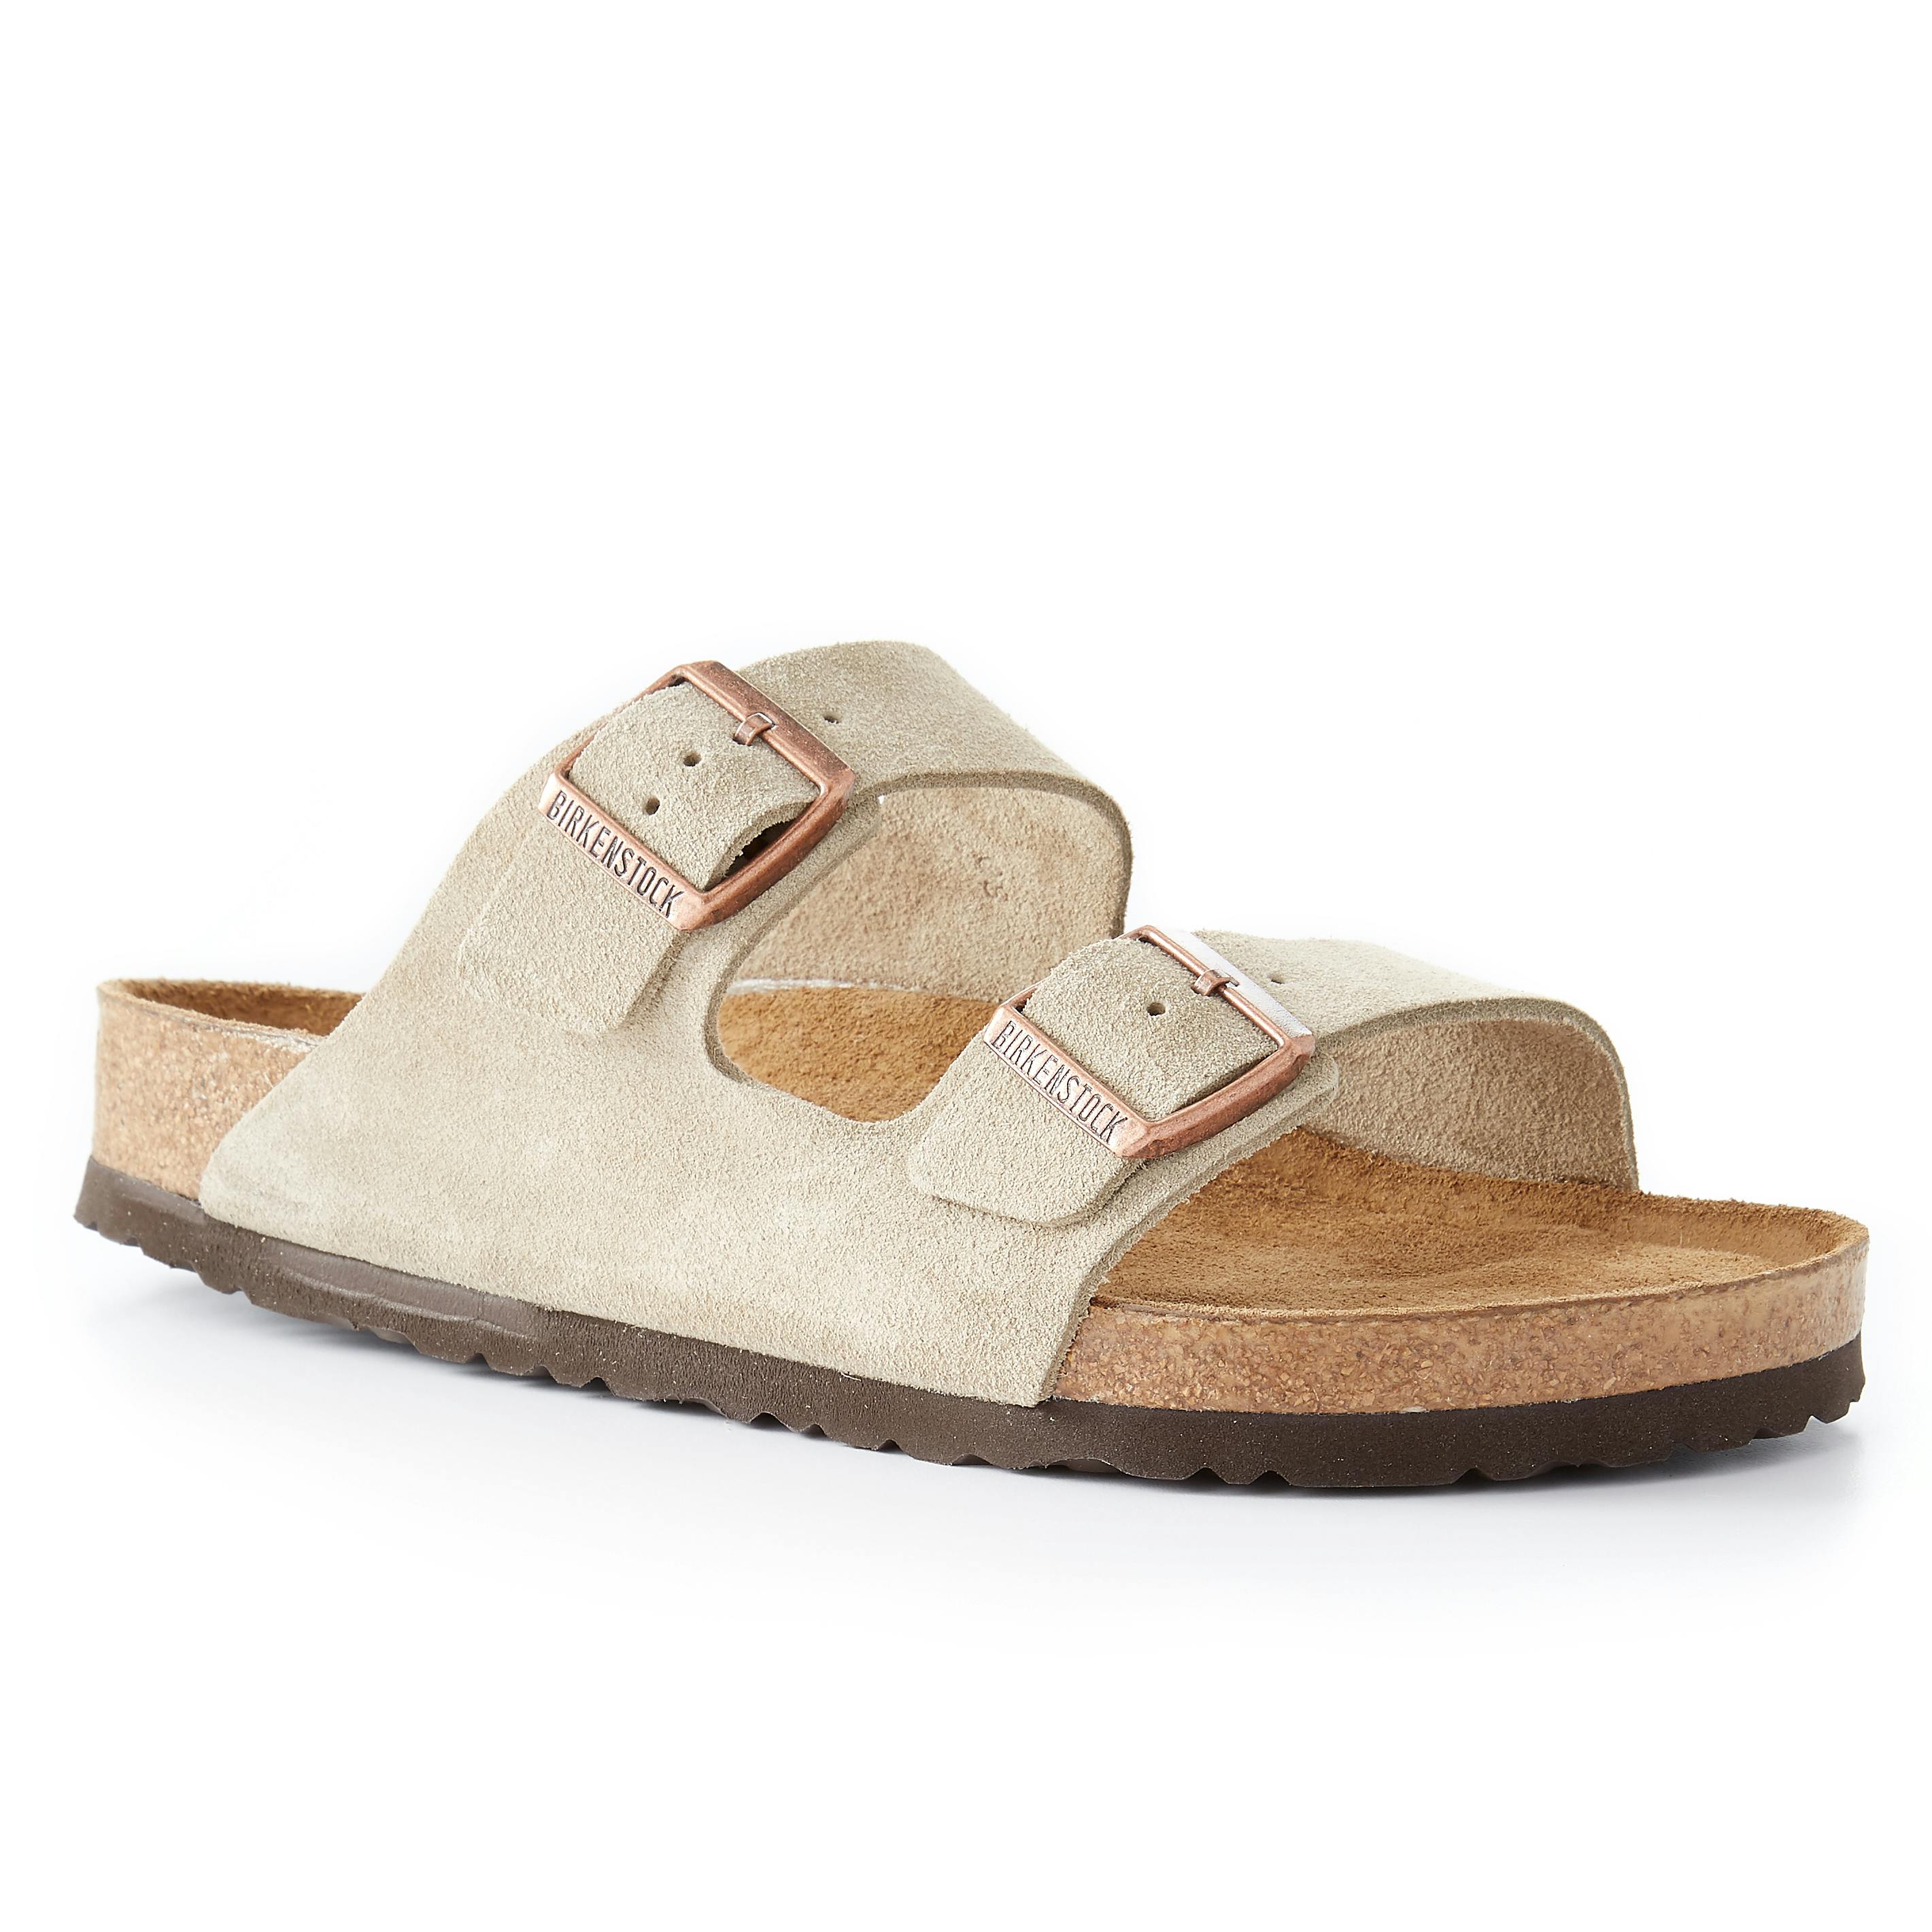 Birkenstock Arizona Sandal - Suede Leather Taupe | Sandals & Flip Flops Huckberry